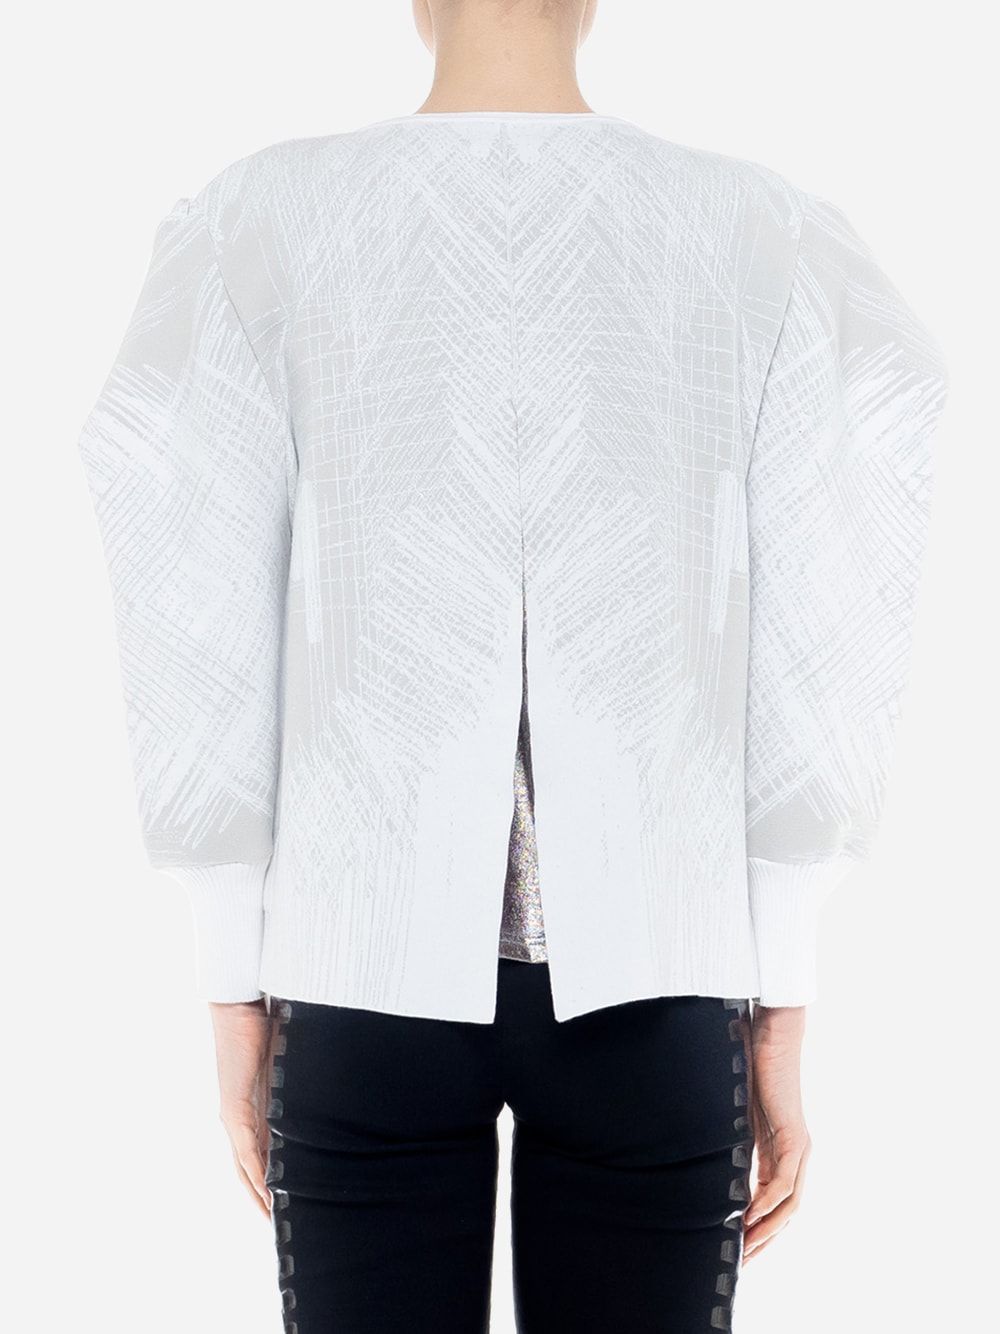 Jacquard Jacket With Light Abstract Pattern | Luis Buchinho